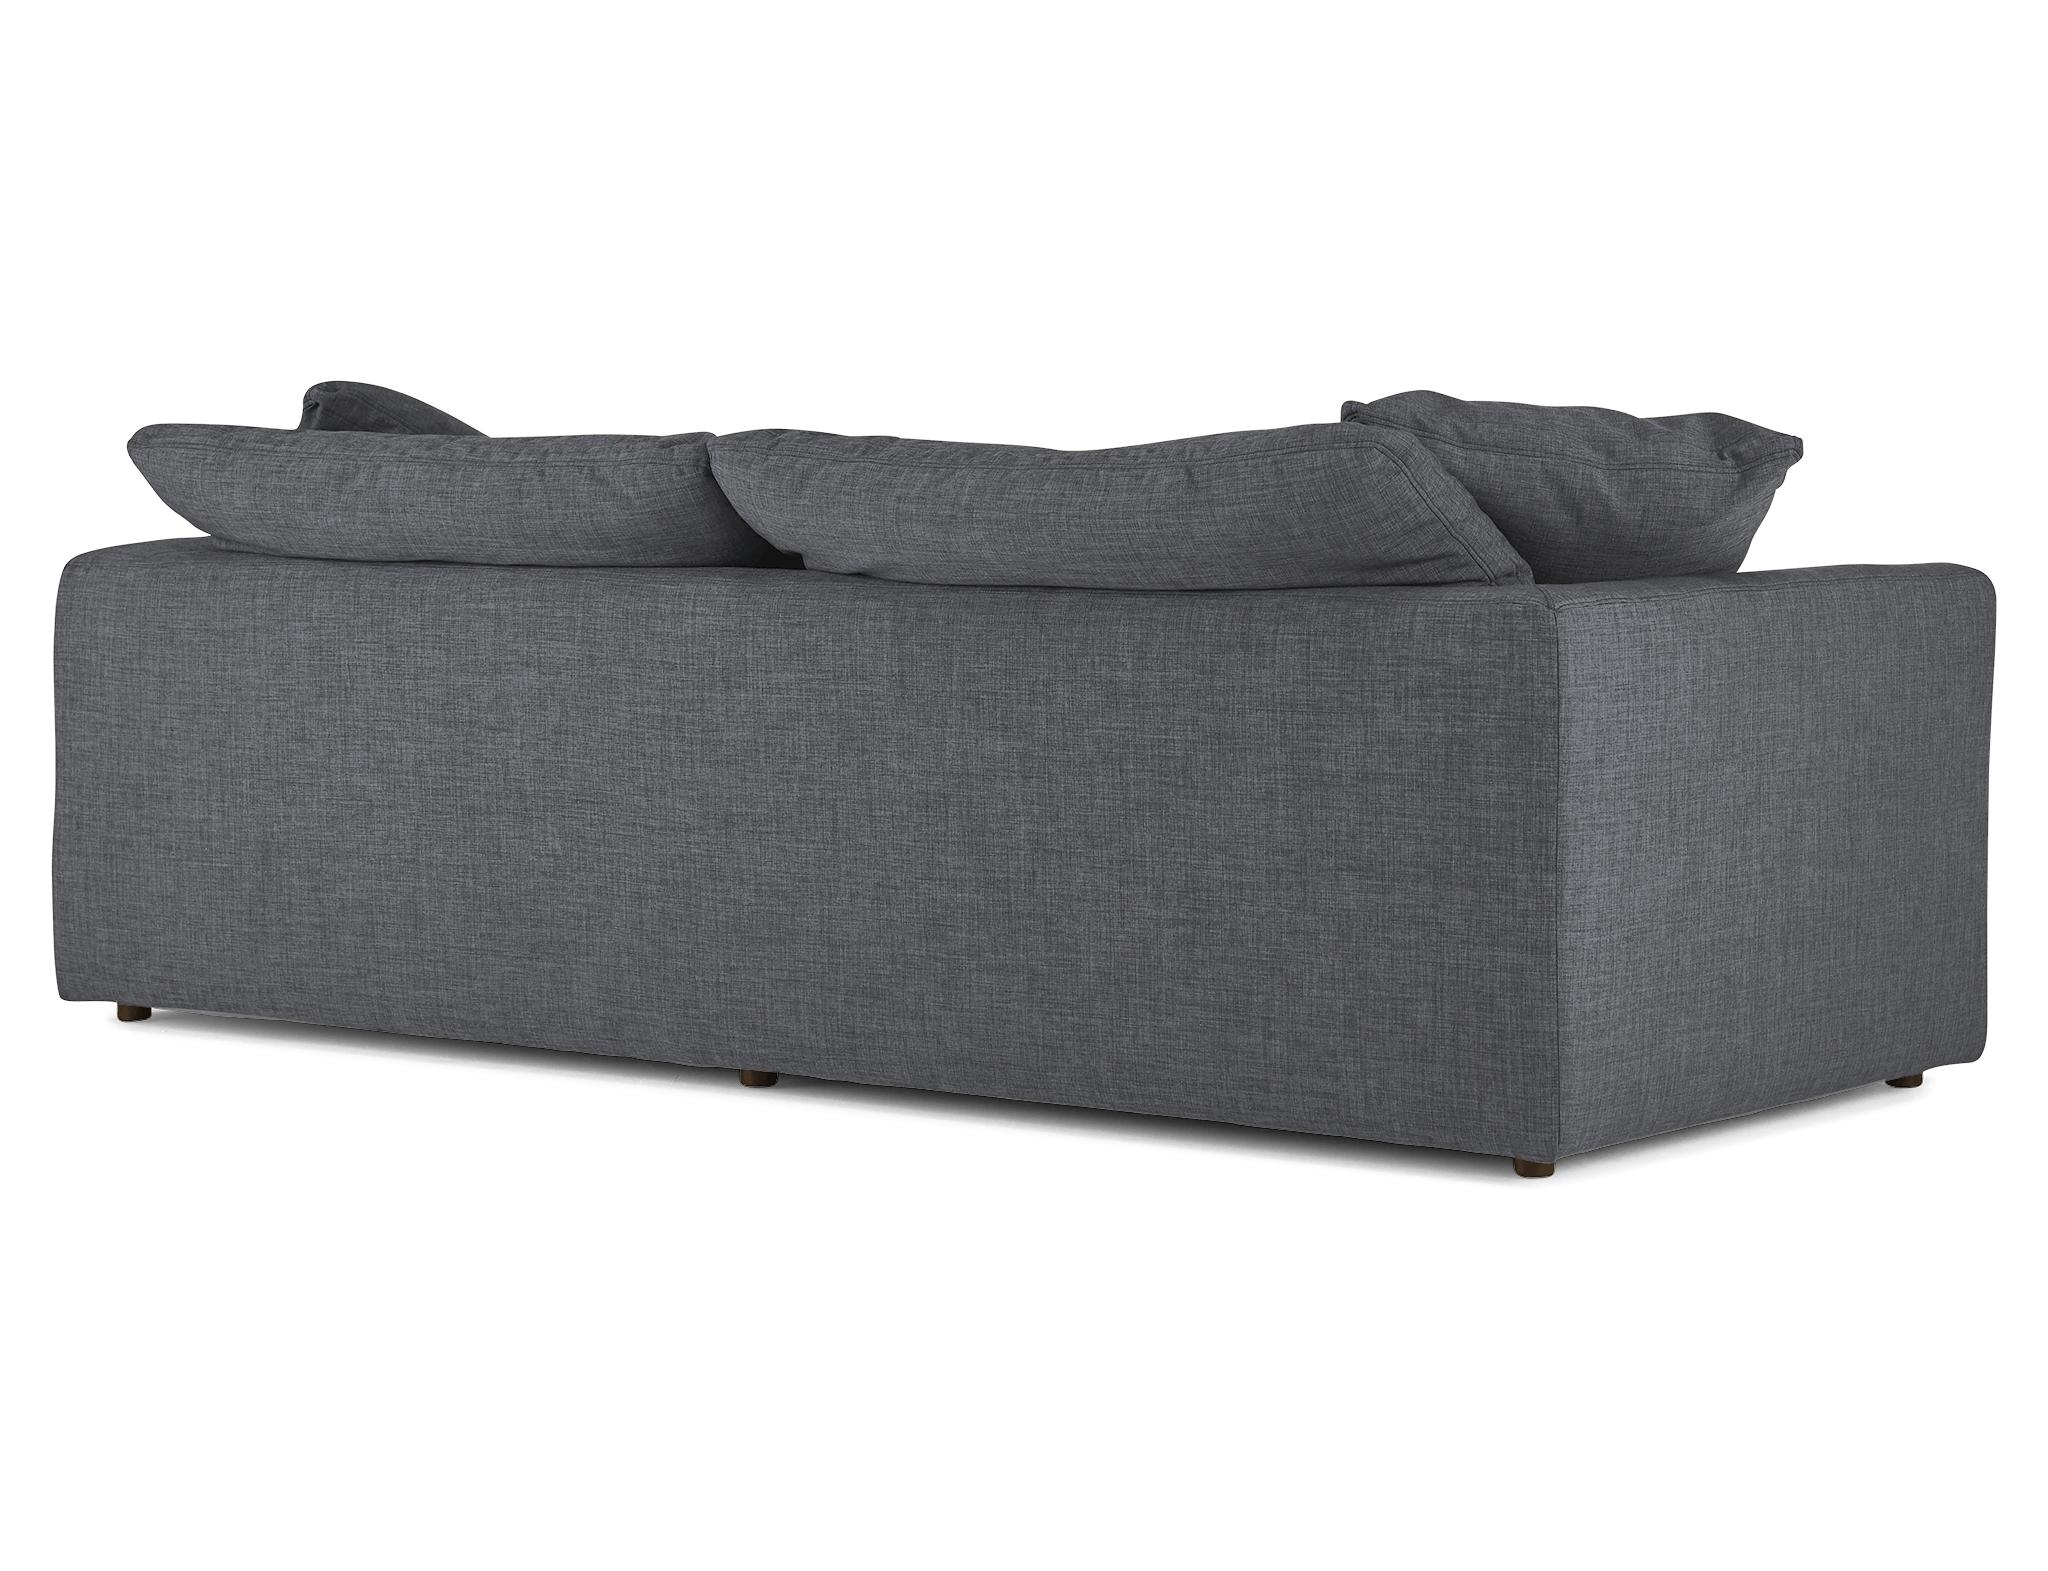 Gray Bryant Mid Century Modern Sofa - Essence Ash - Image 3